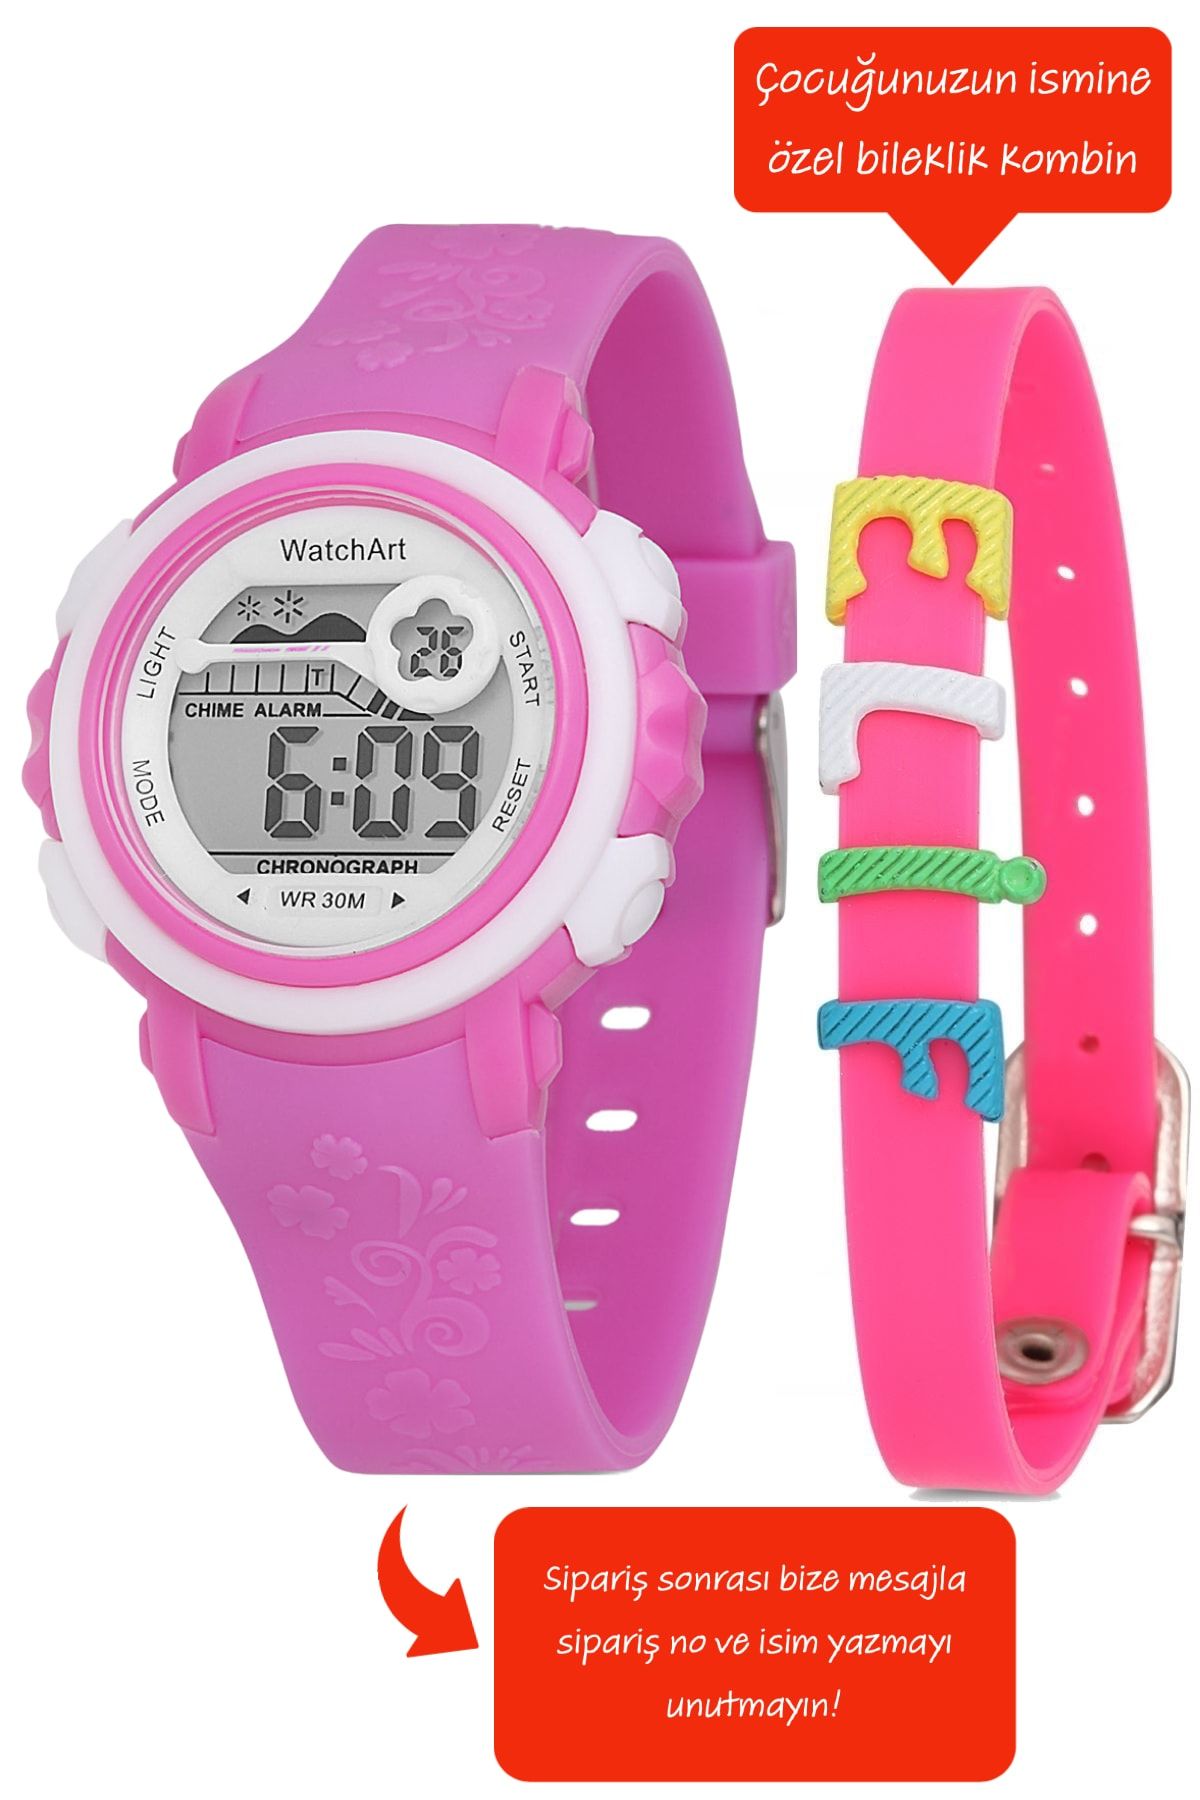 Watchart Çocuk Saat Su Geçirmez Dijital Kronometre Kız Çocuk Kol Saati - Isme Özel Bileklik Kombin Stc11432